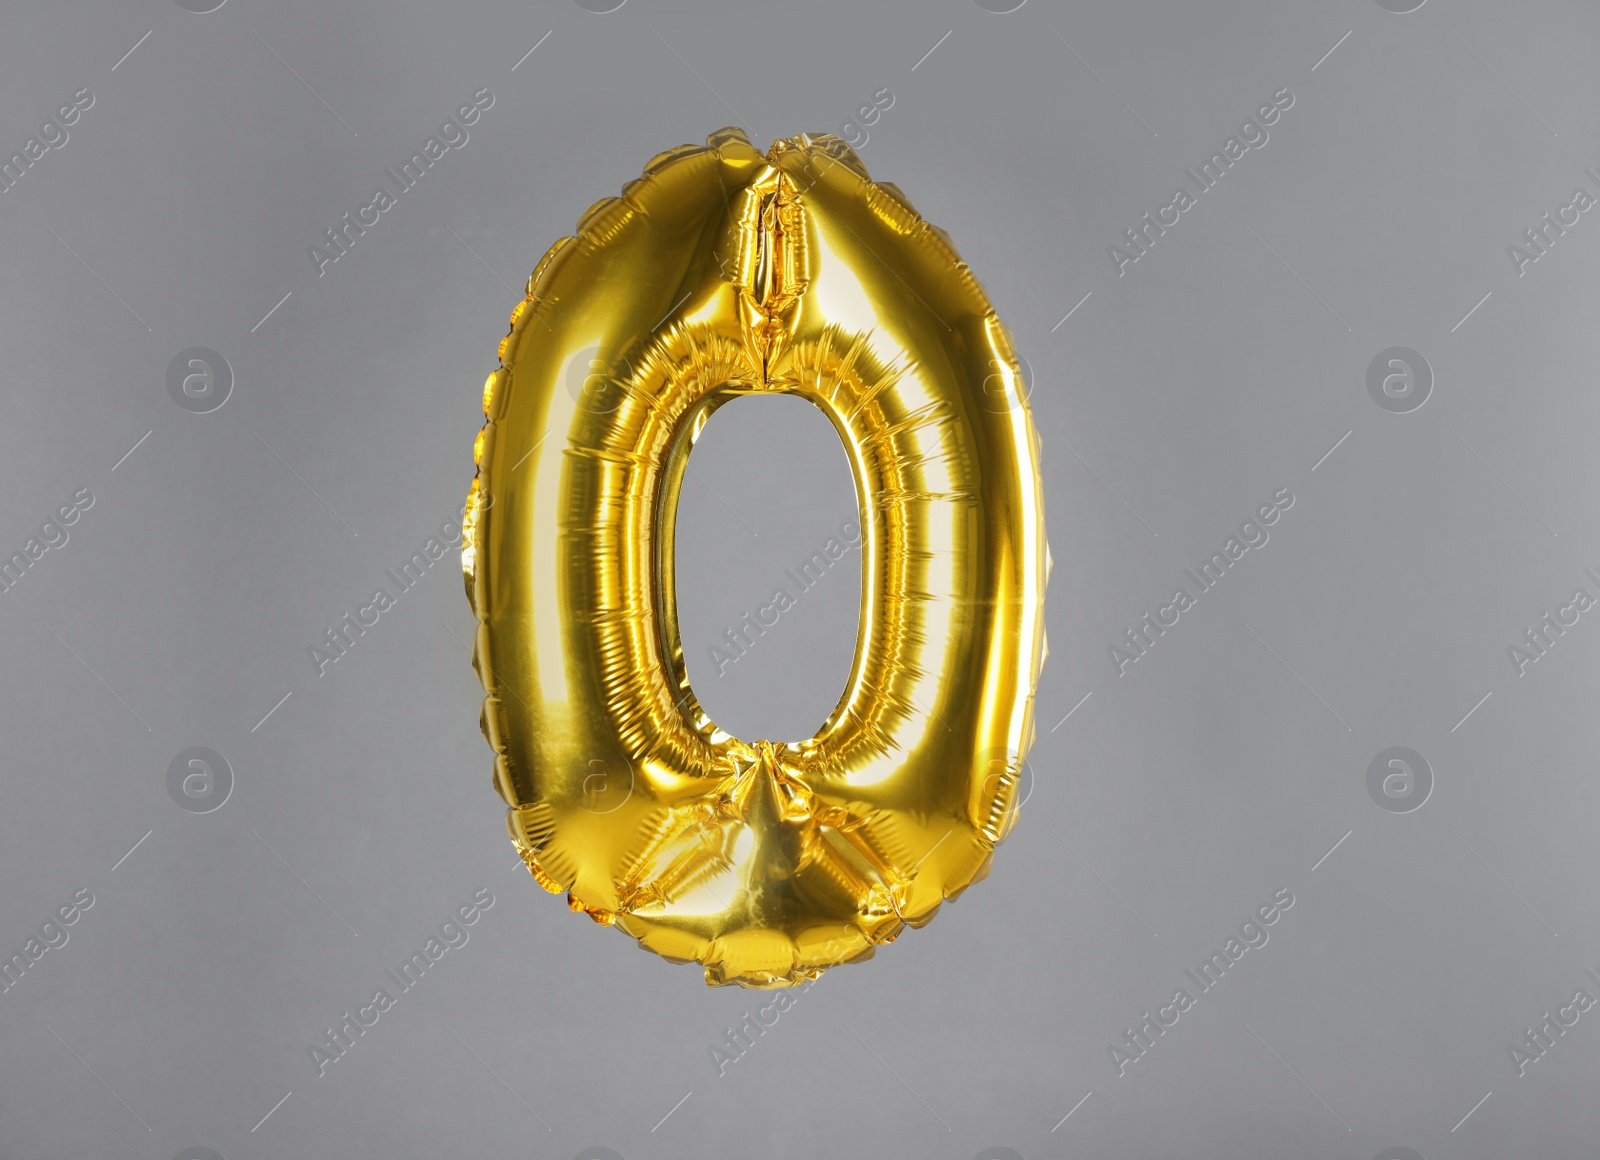 Photo of Golden number zero balloon on grey background